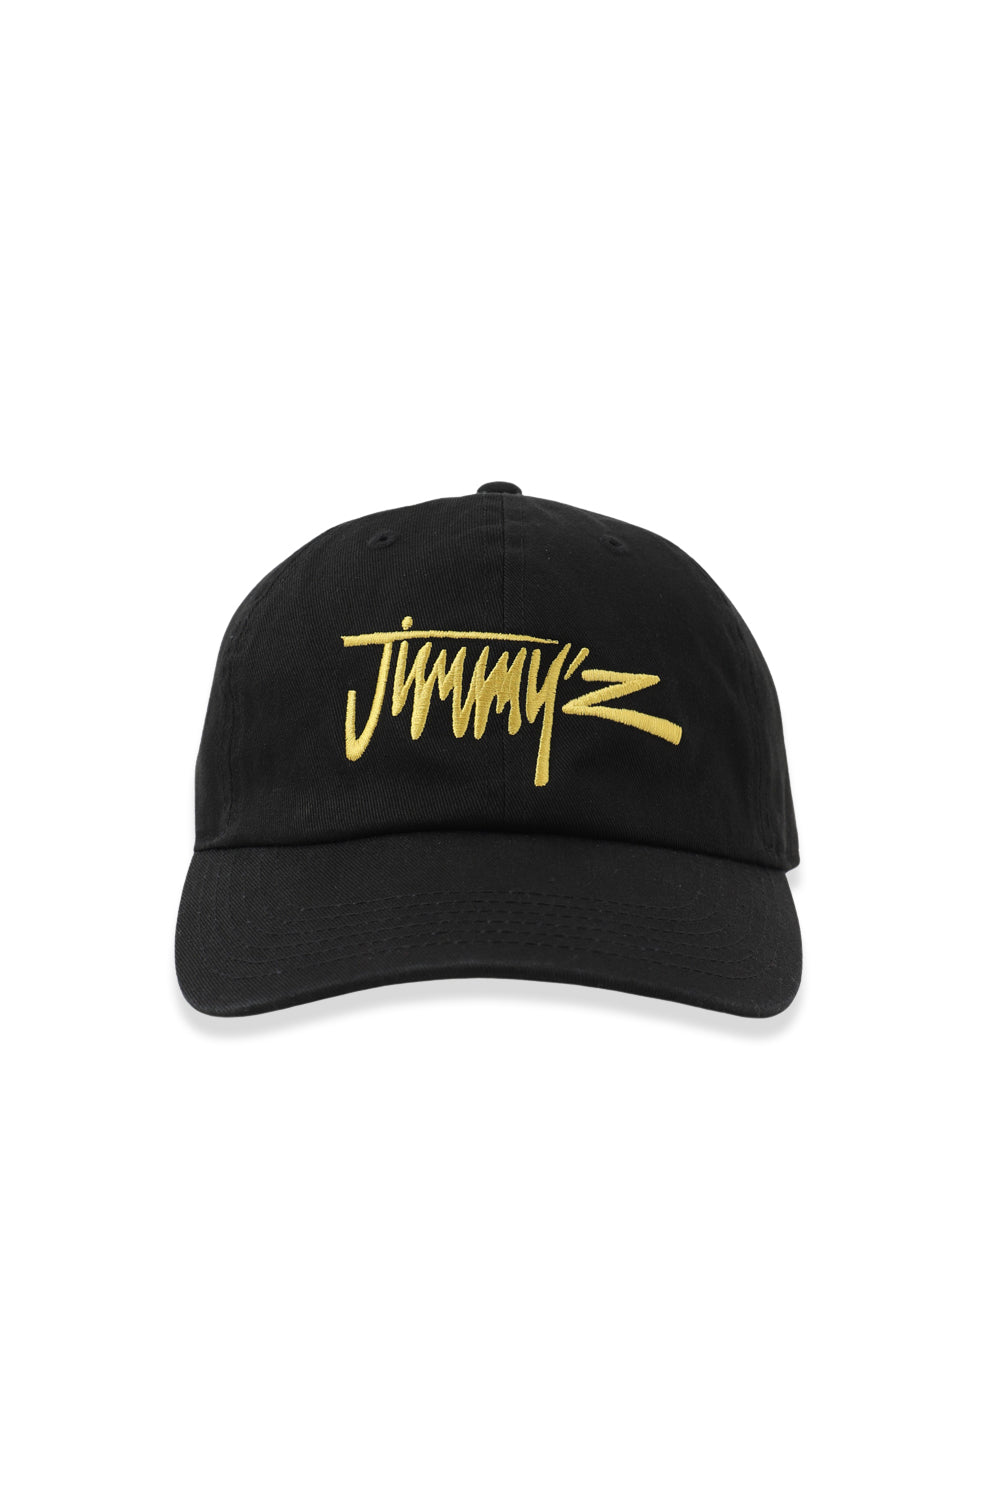 JIMMY'Z Logo CAP Black